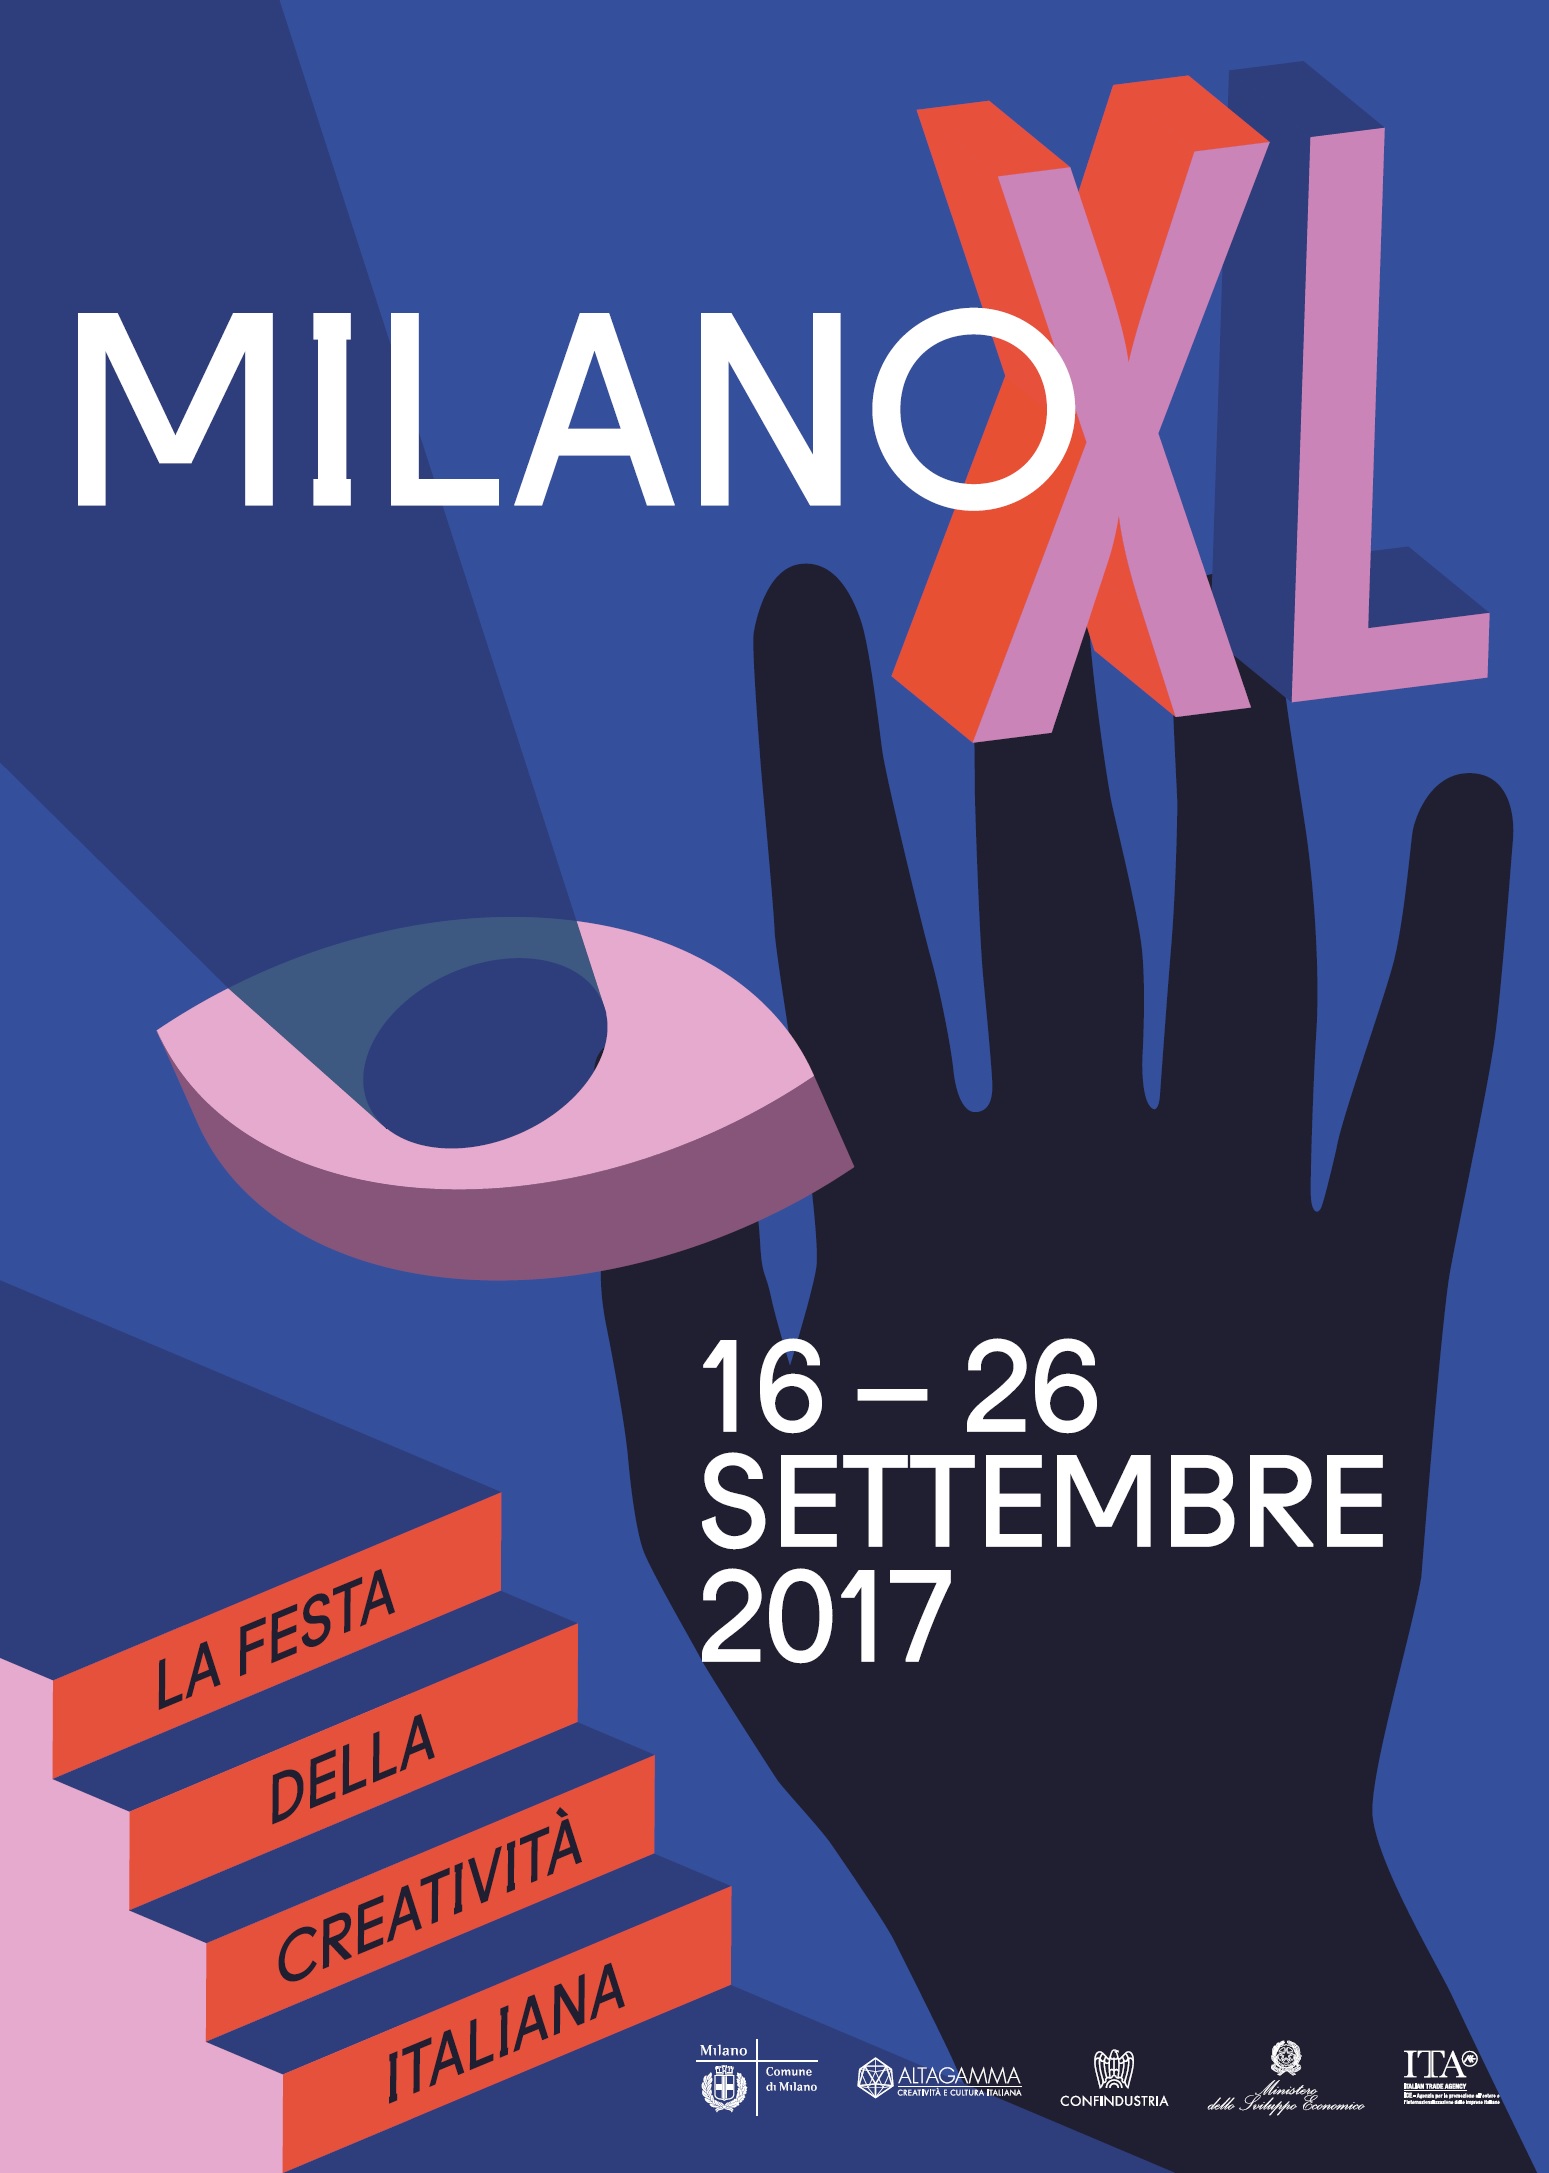 La Milano Fashion Week di Settembre 2017 è ... XL e green!